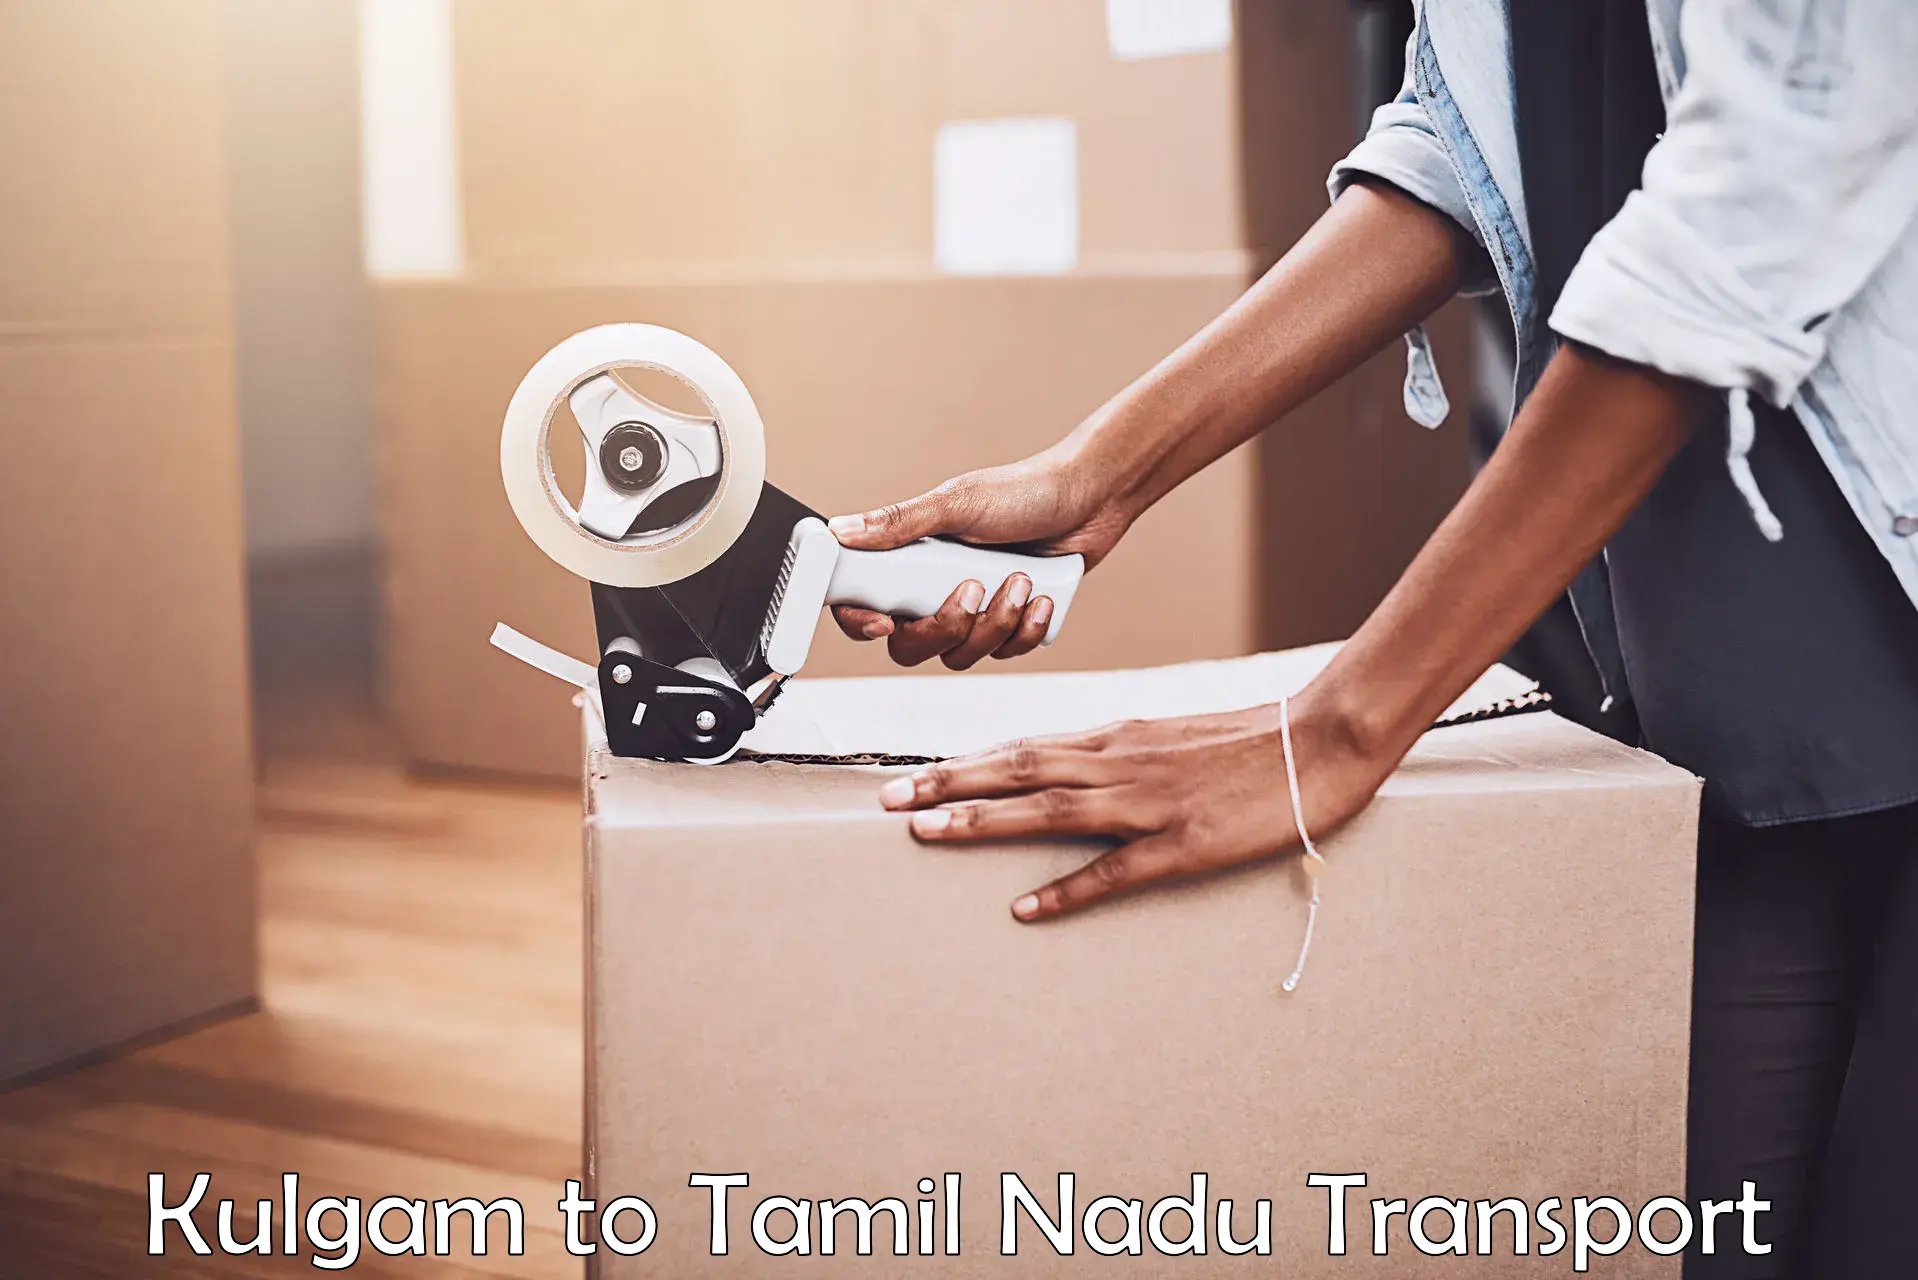 Cargo transportation services in Kulgam to Tamil Nadu